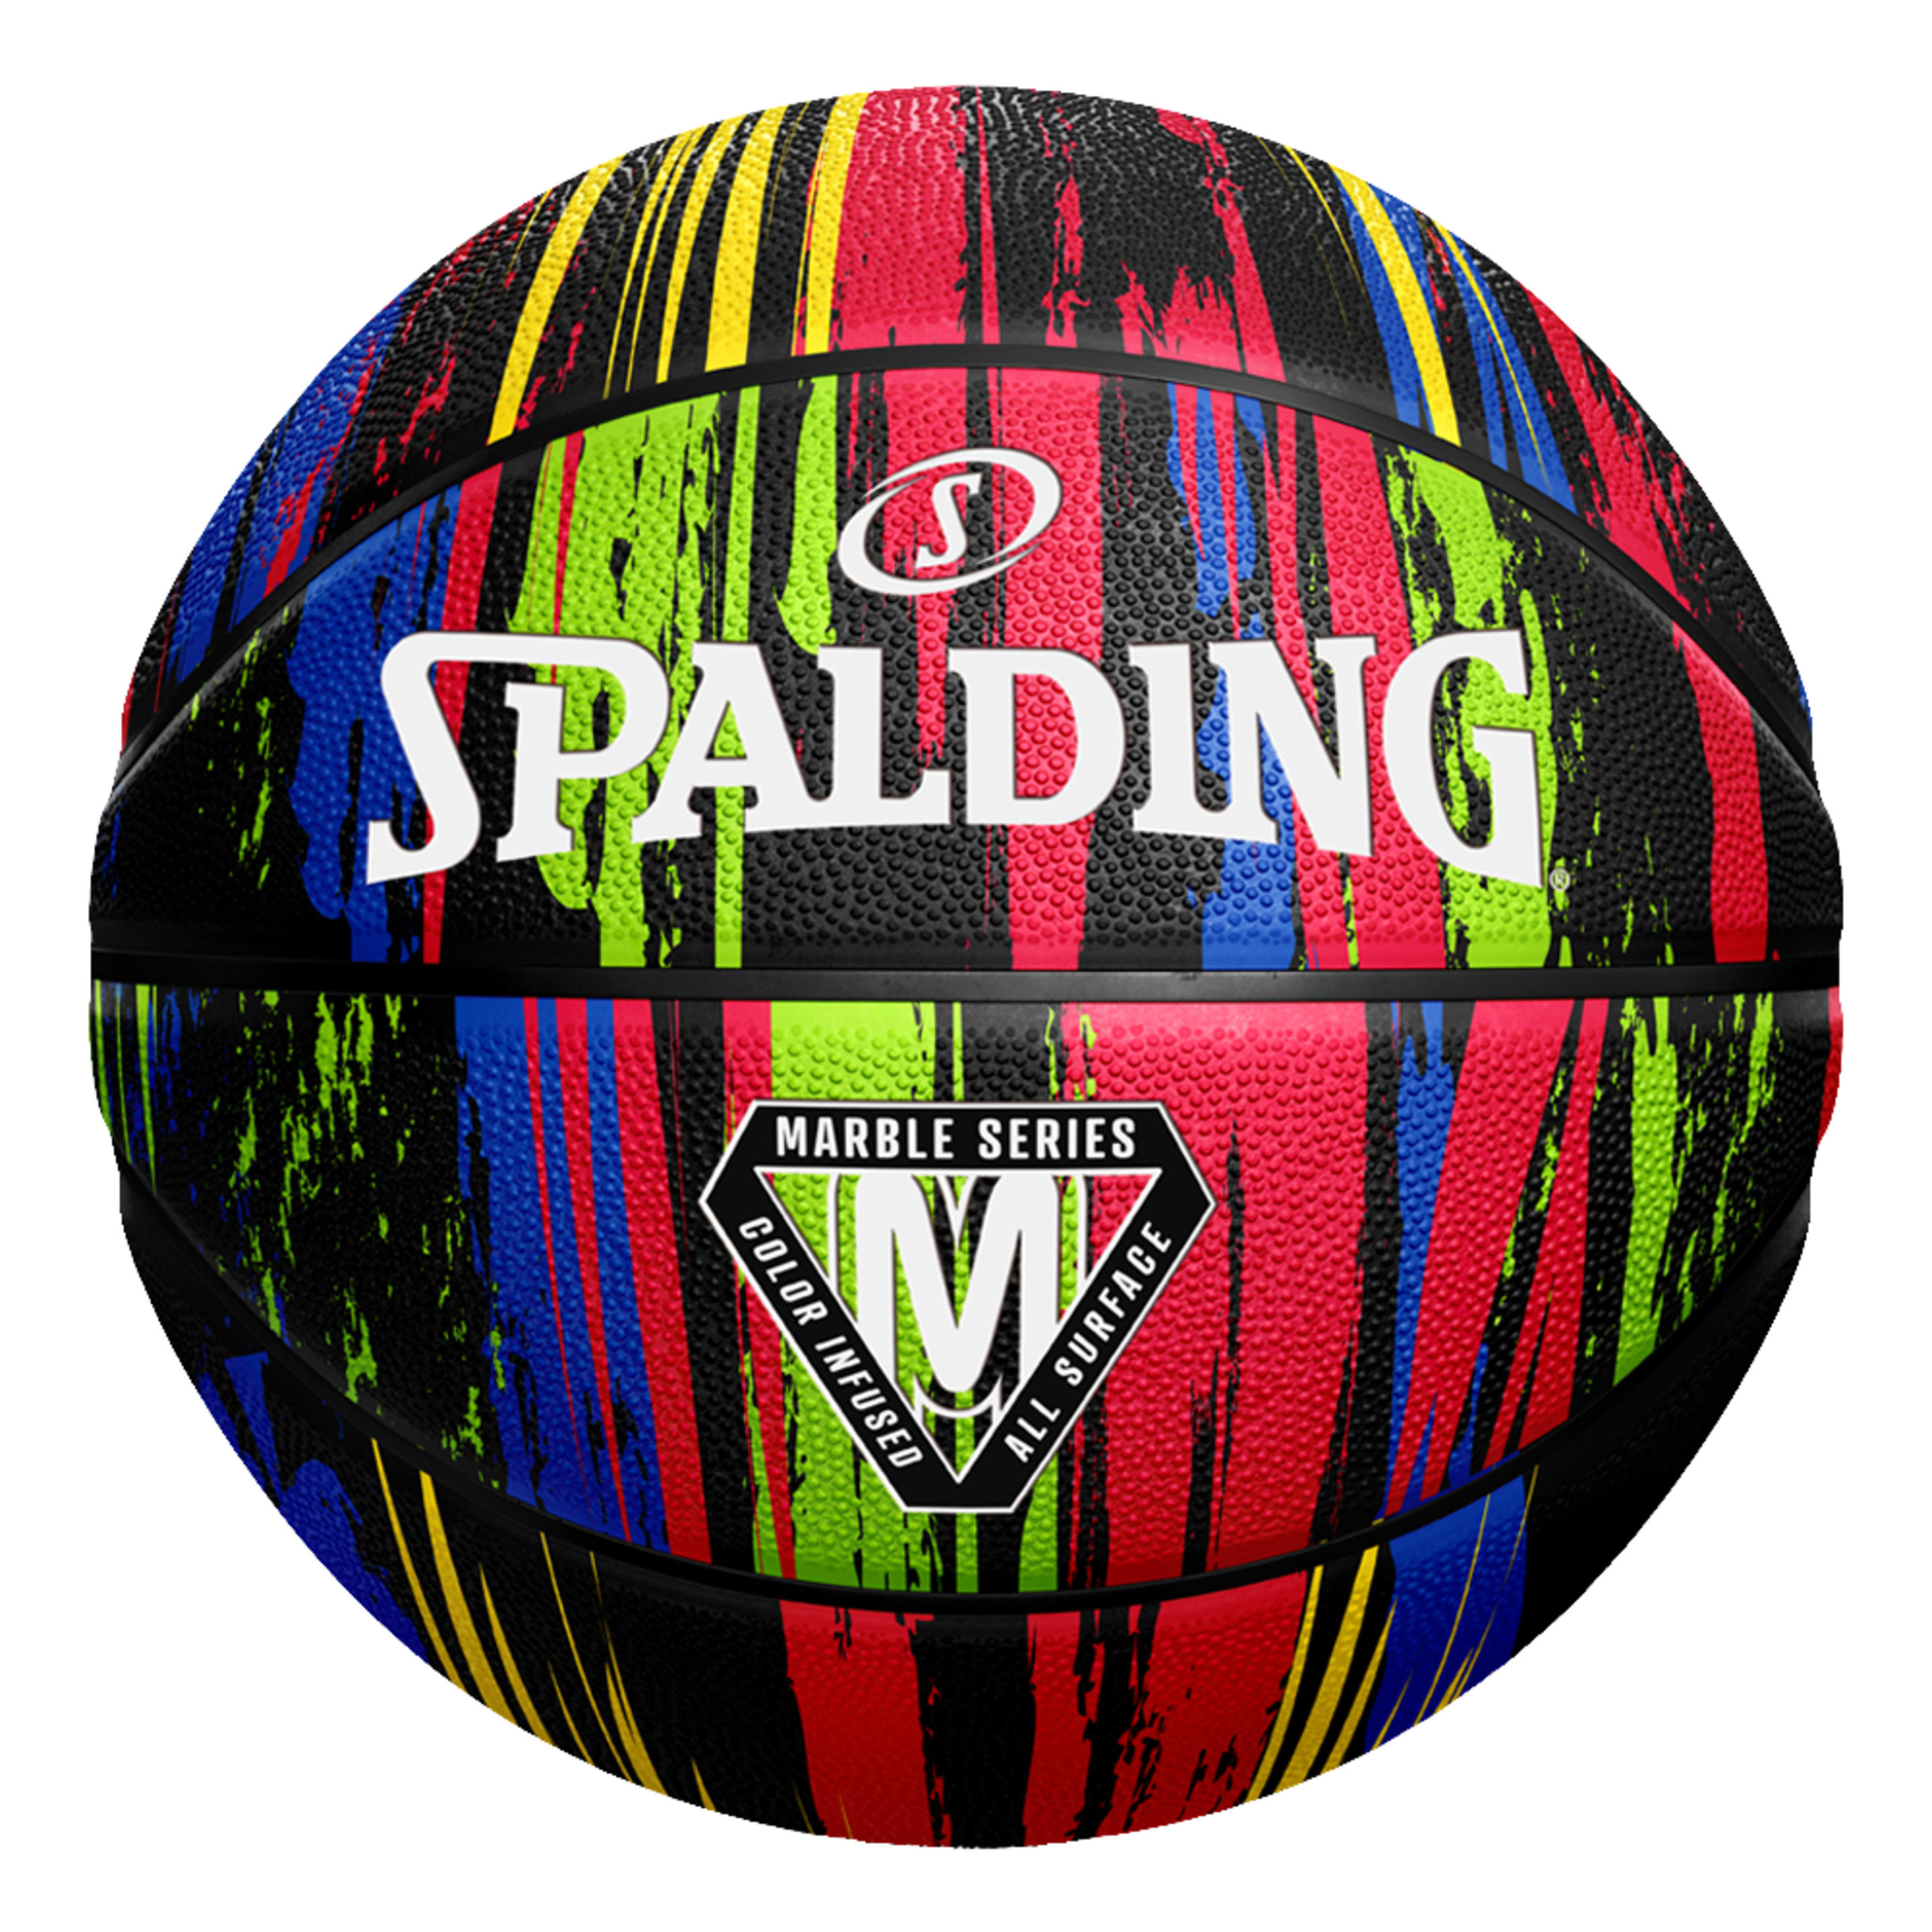 Basquetebol Spalding Marble Series Black Rainbow Sz7 - multicolor - 